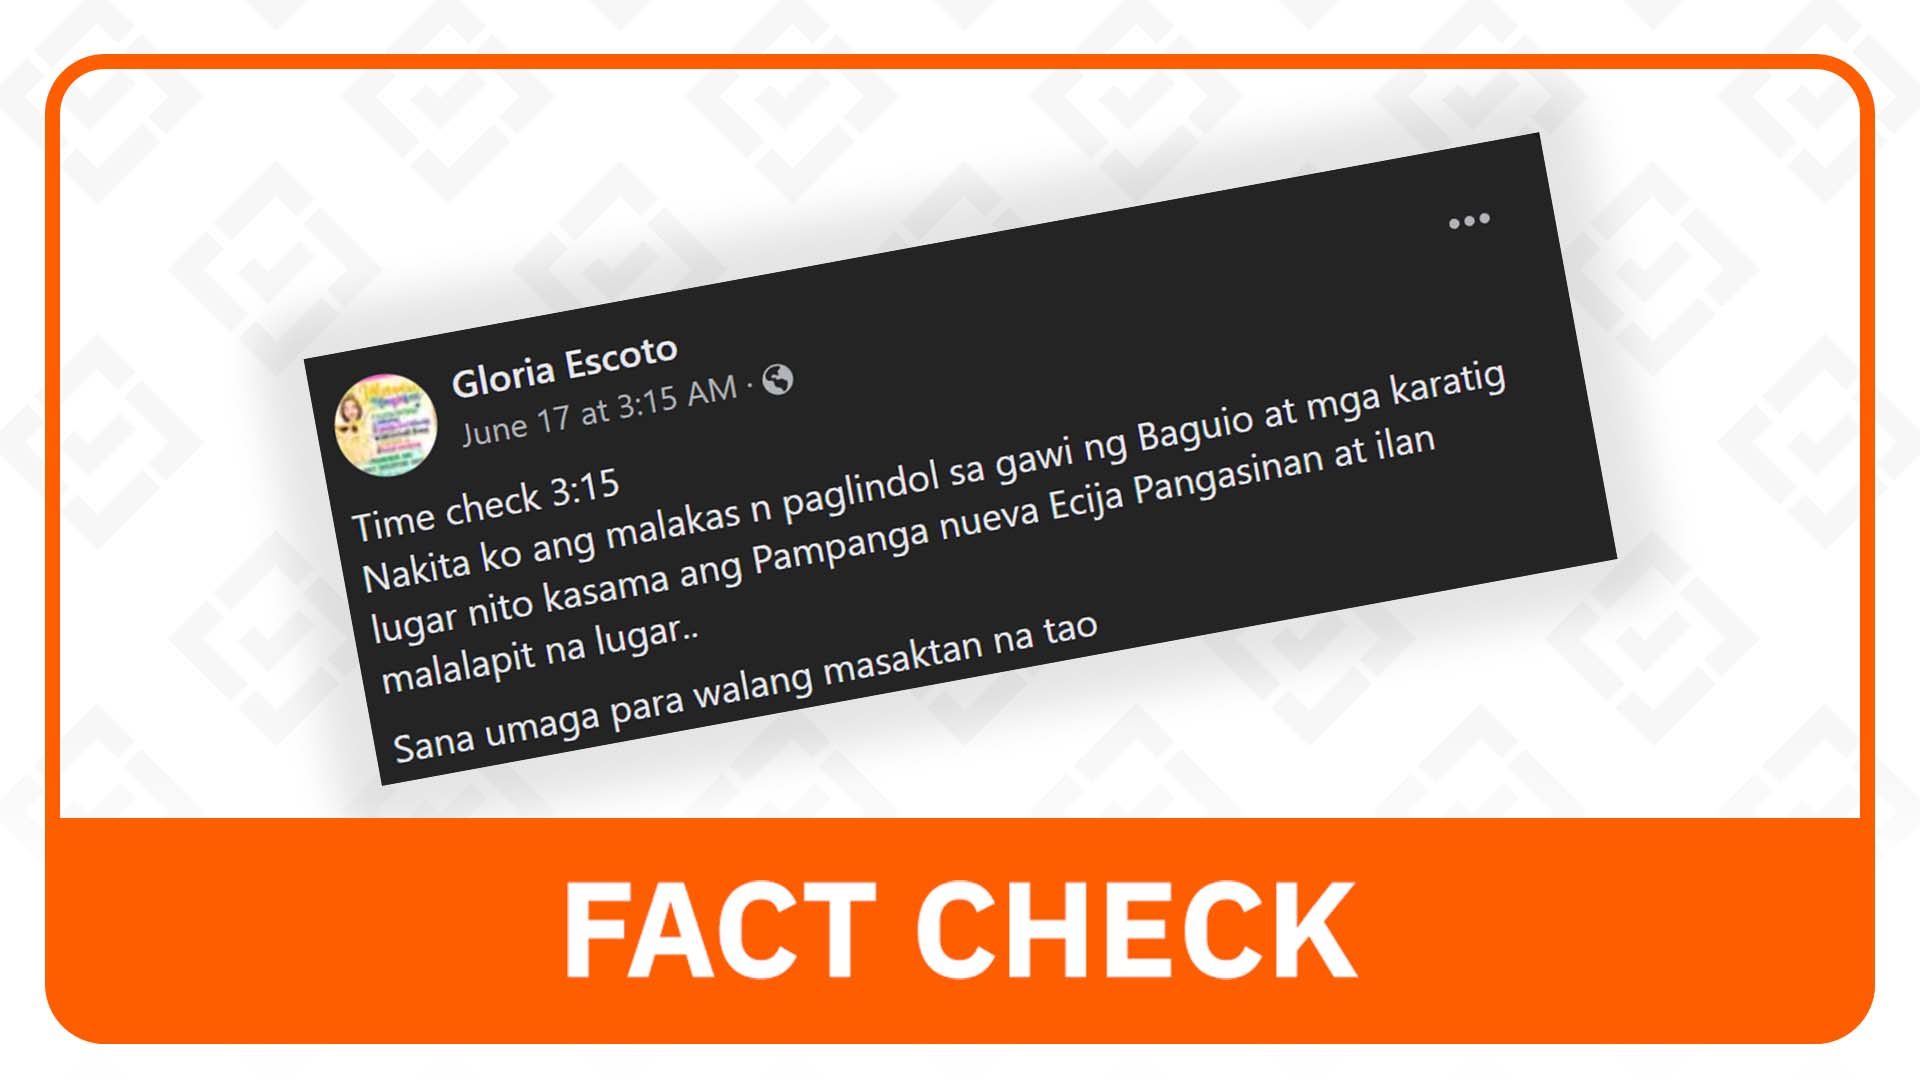 FACT CHECK: No prediction of earthquakes to hit Baguio, several Luzon provinces